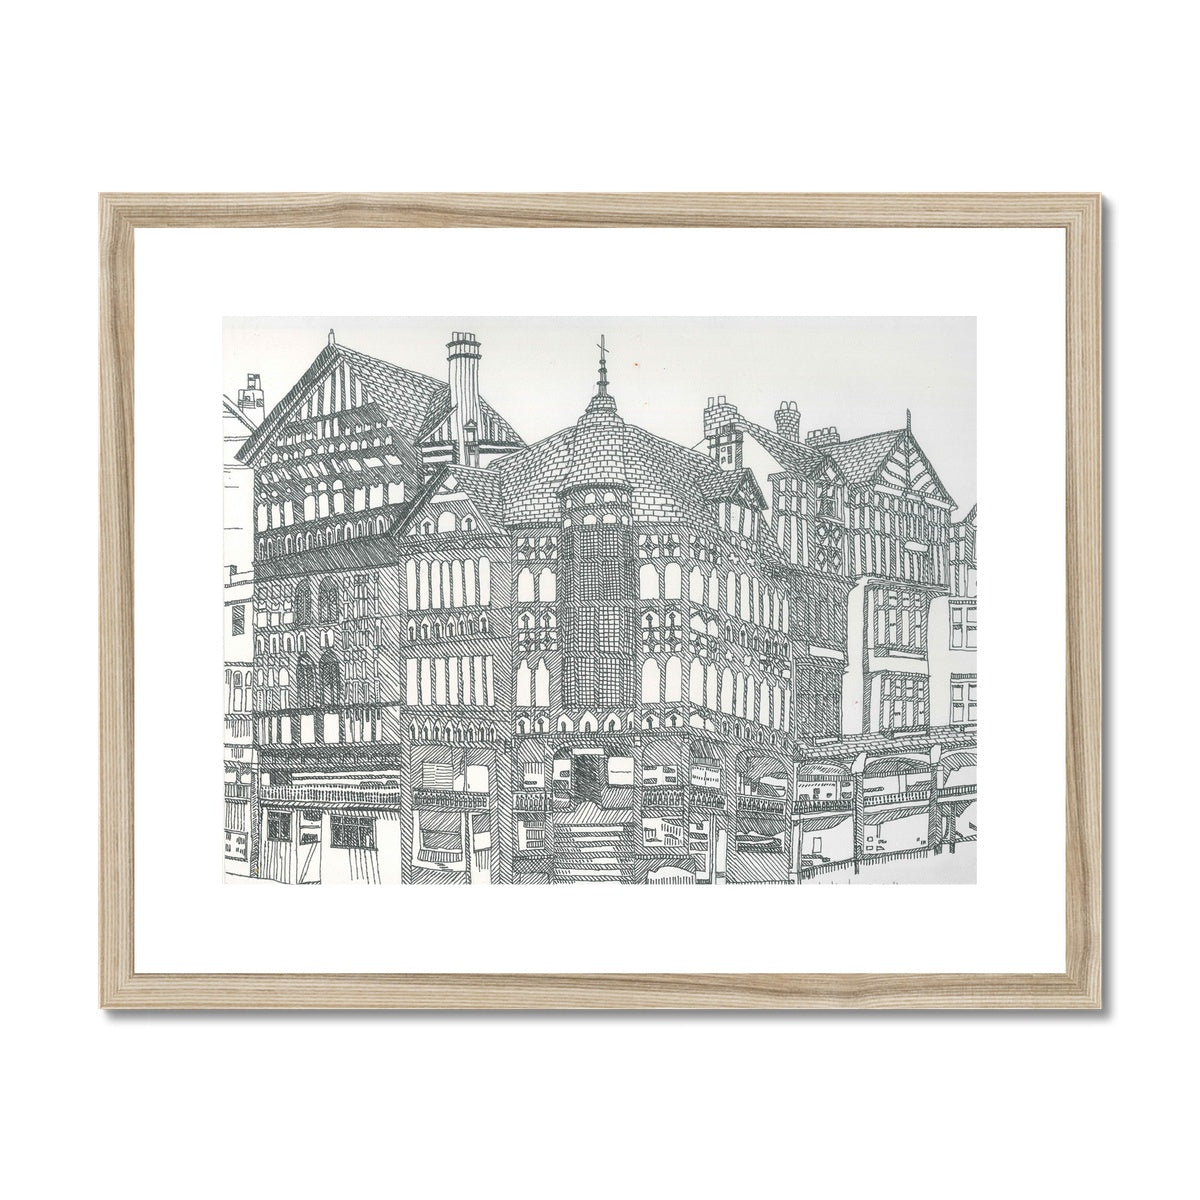 Tudor House, Framed & Mounted Print